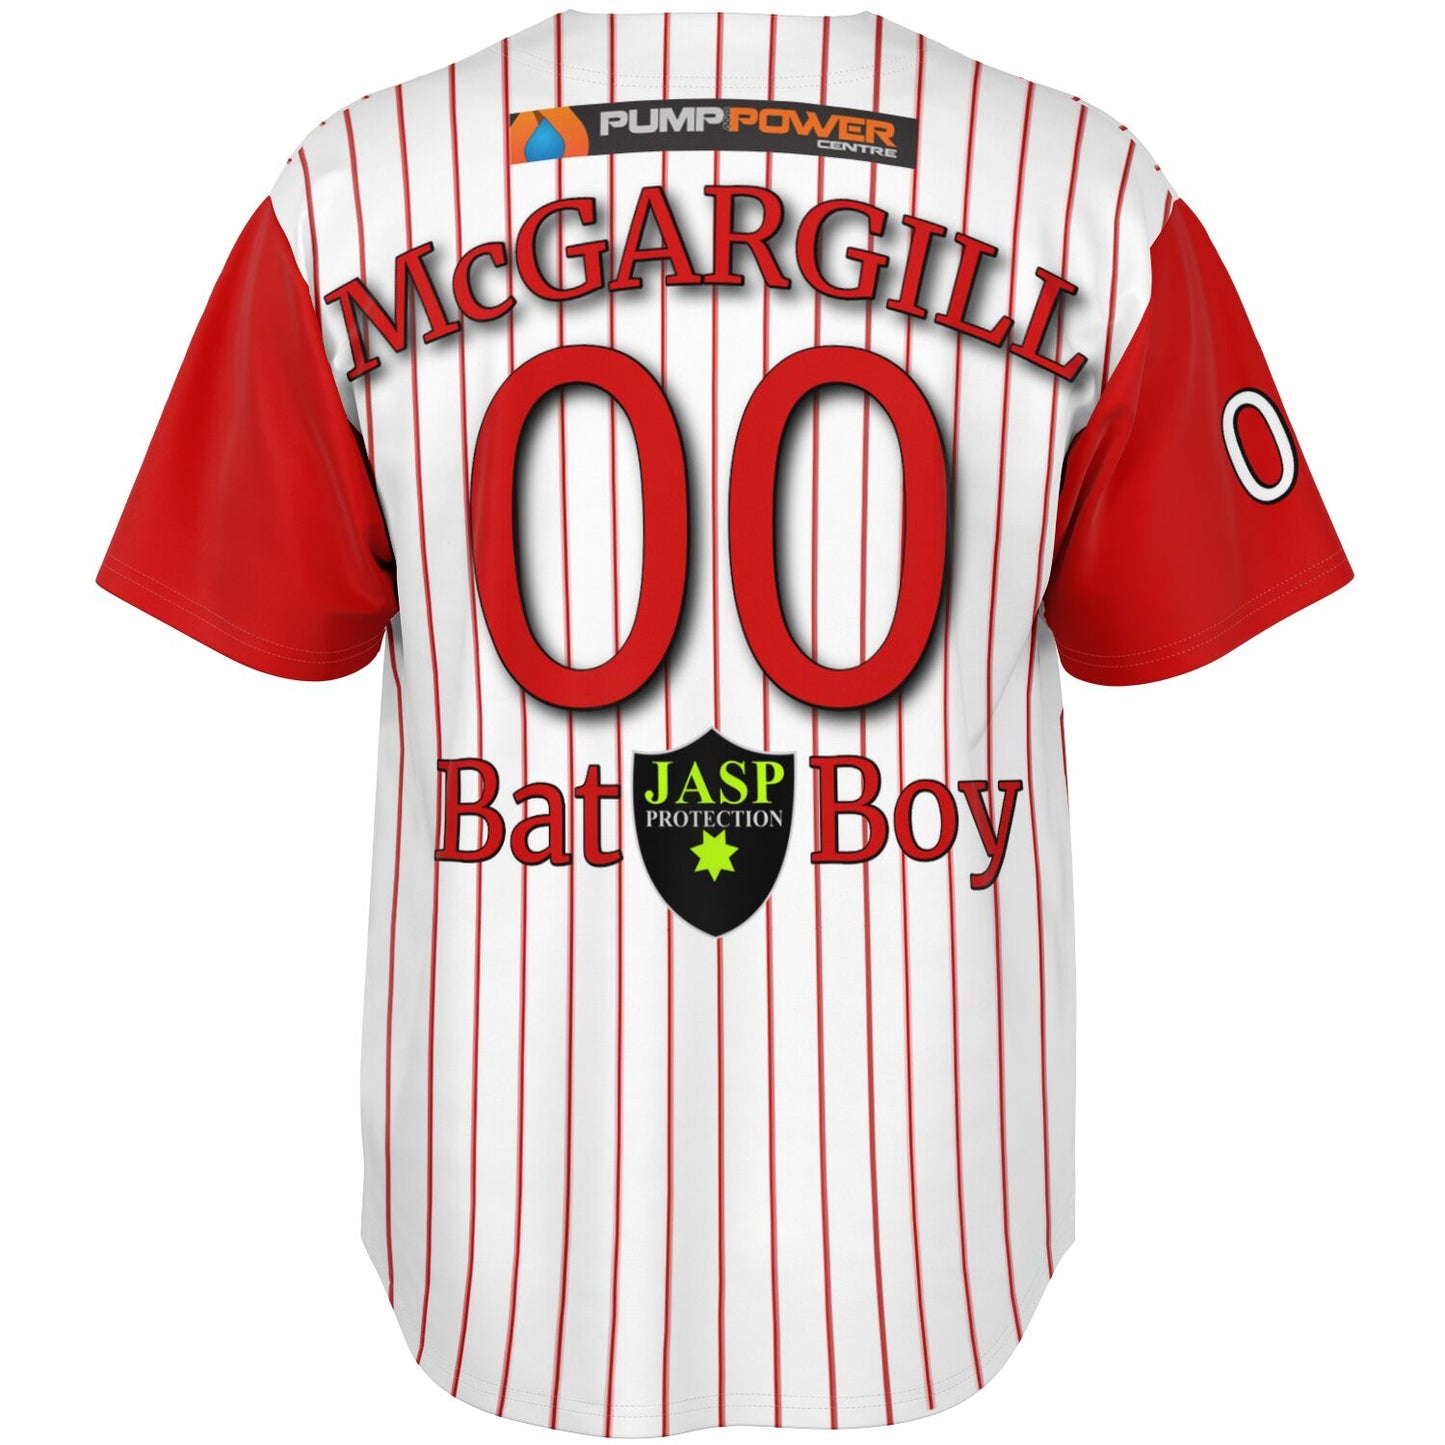 Logan McGargill #00 Demons Bat Boy Baseball Jersey - Home